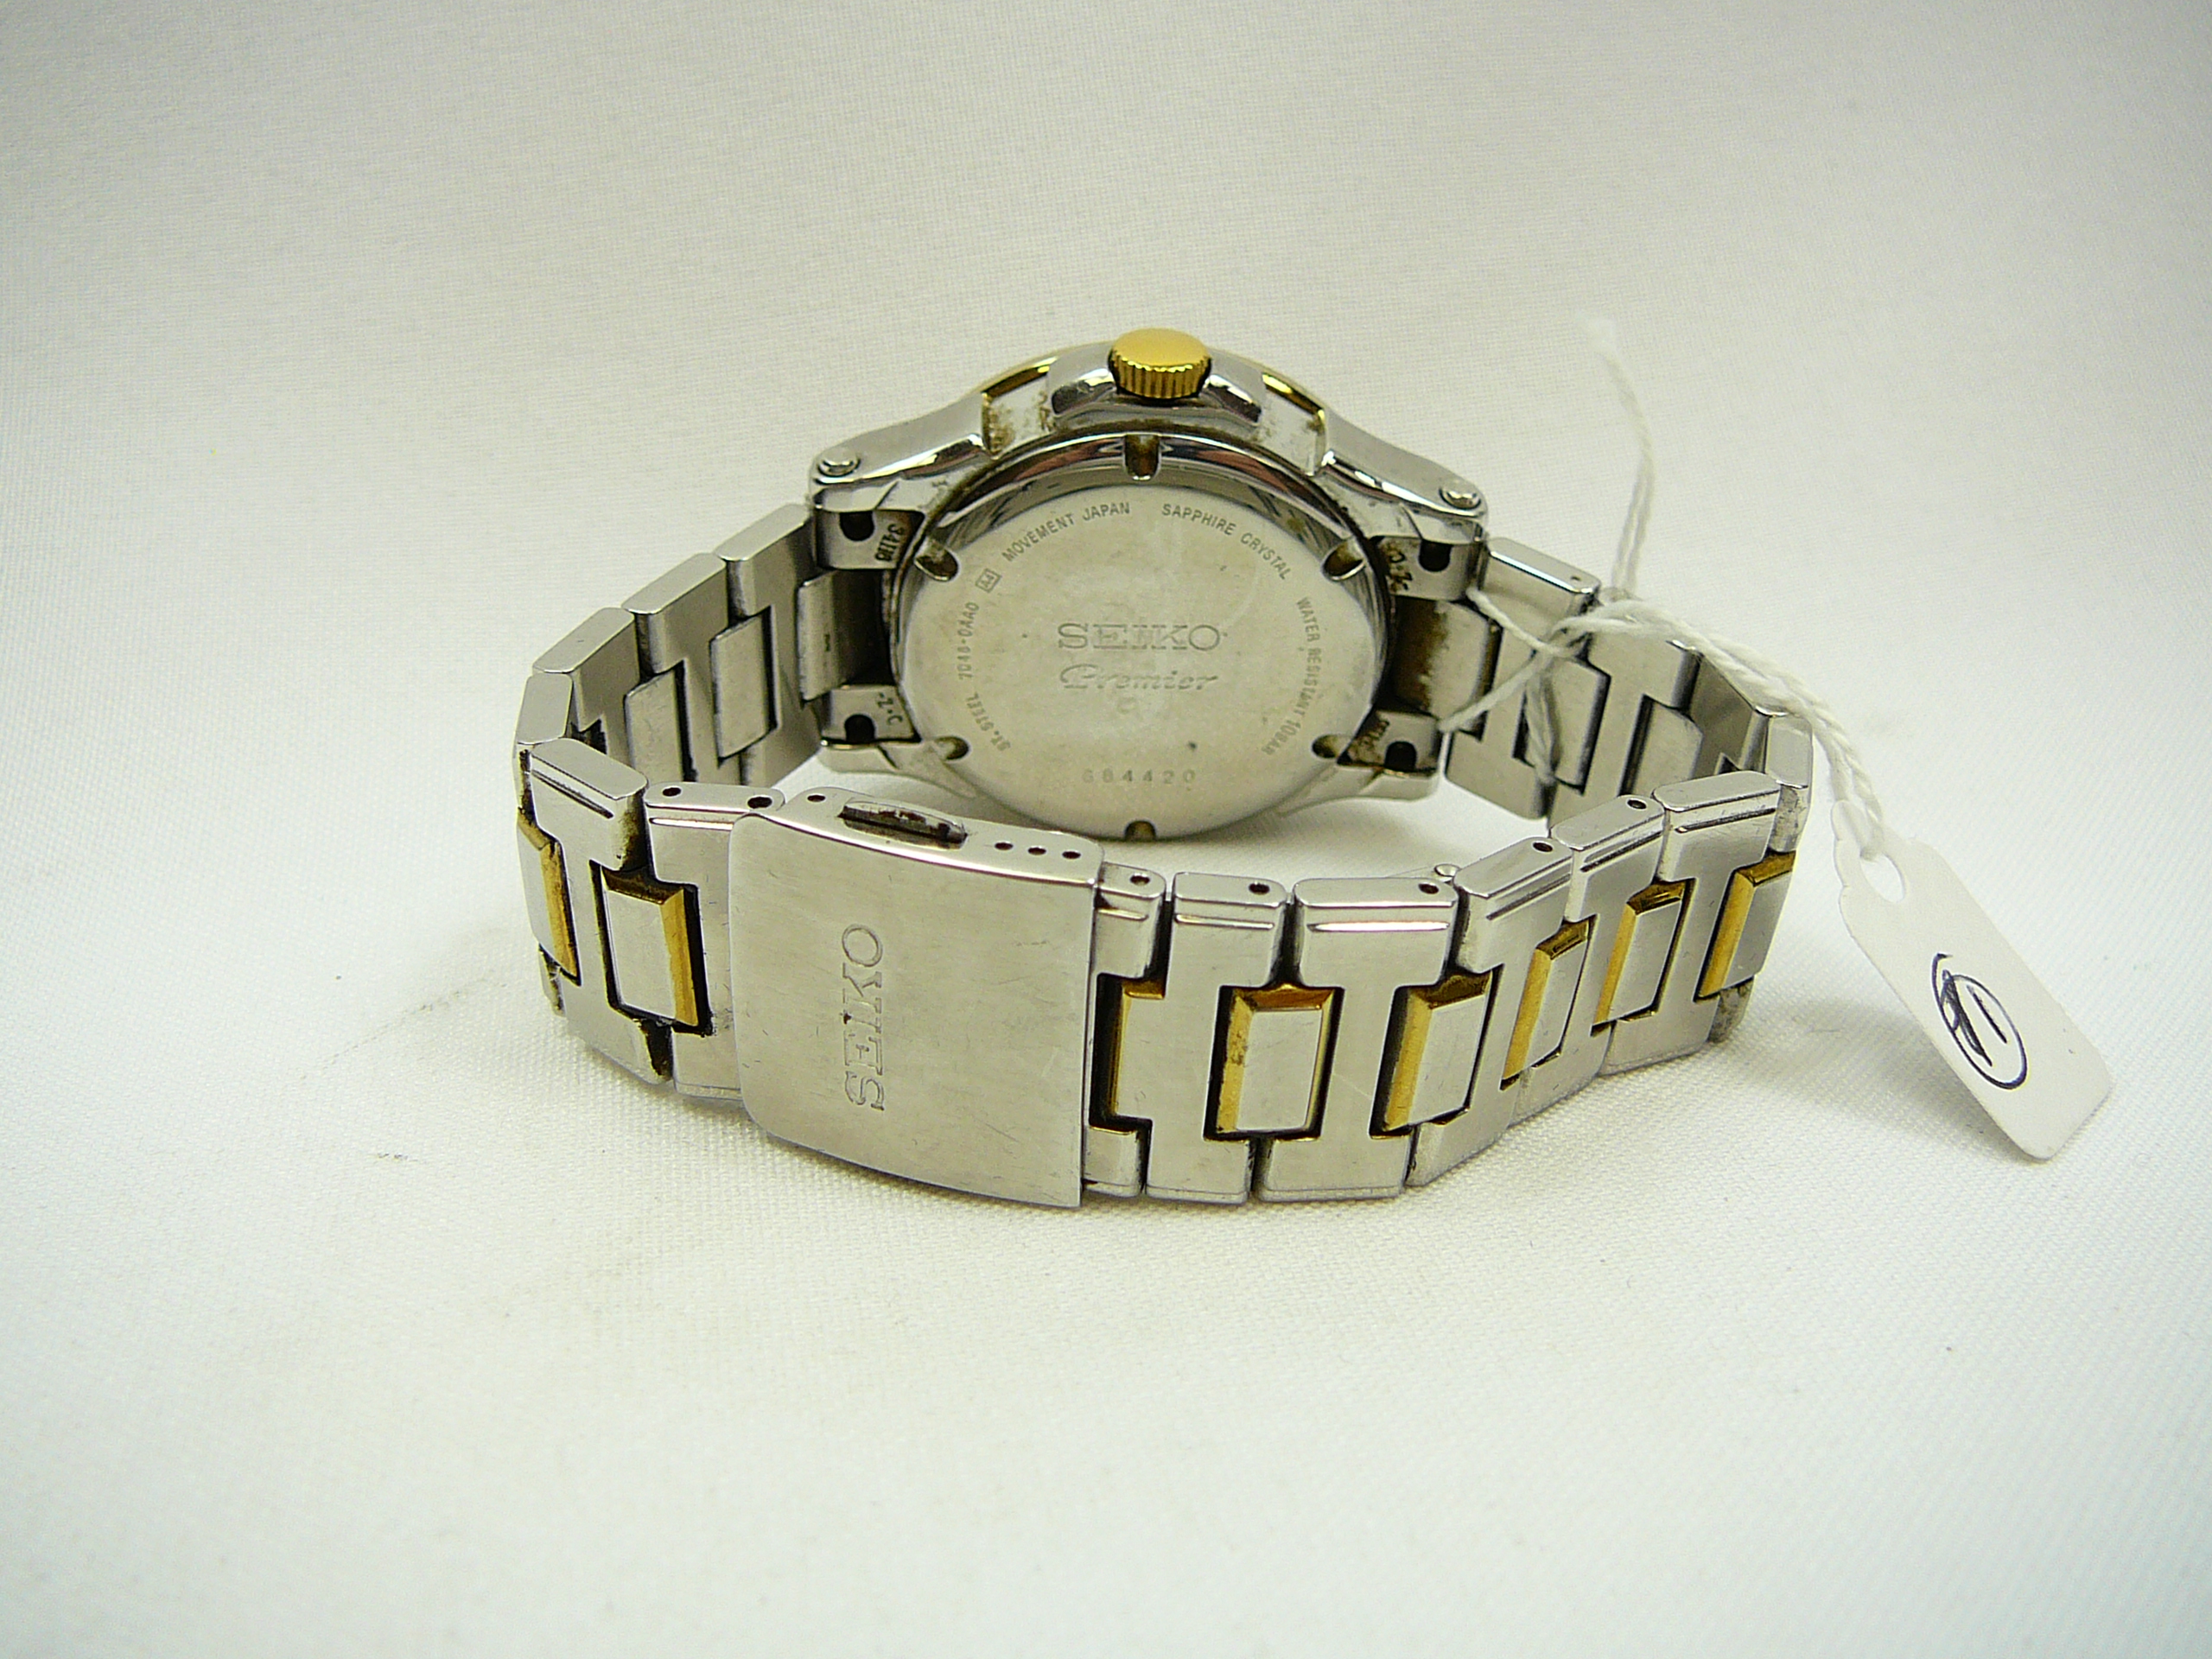 Gents Seiko chronograph wristwatch - Image 3 of 3